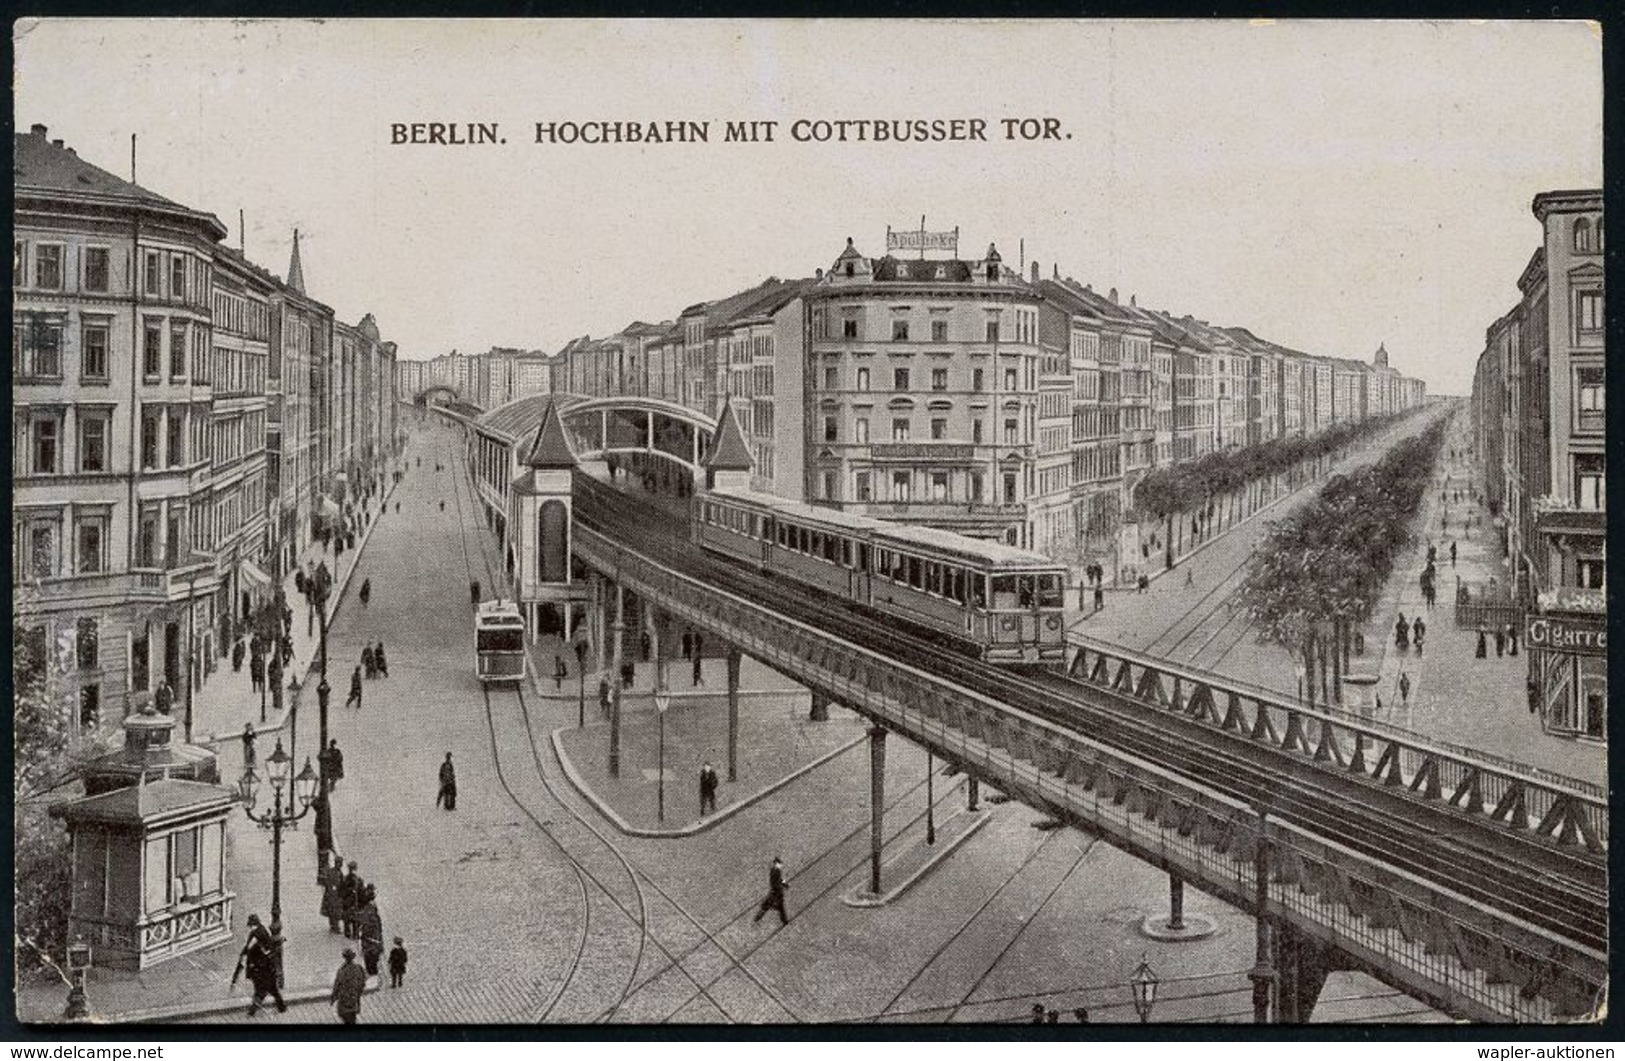 UNTERGRUNDBAHN /U-BAHN : Berlin-Kreuzberg 1902/11 U-Bahnhof Cottbuser Tor, 8 verschiedene s/w.- u. Color-Foto-Ak. , meis